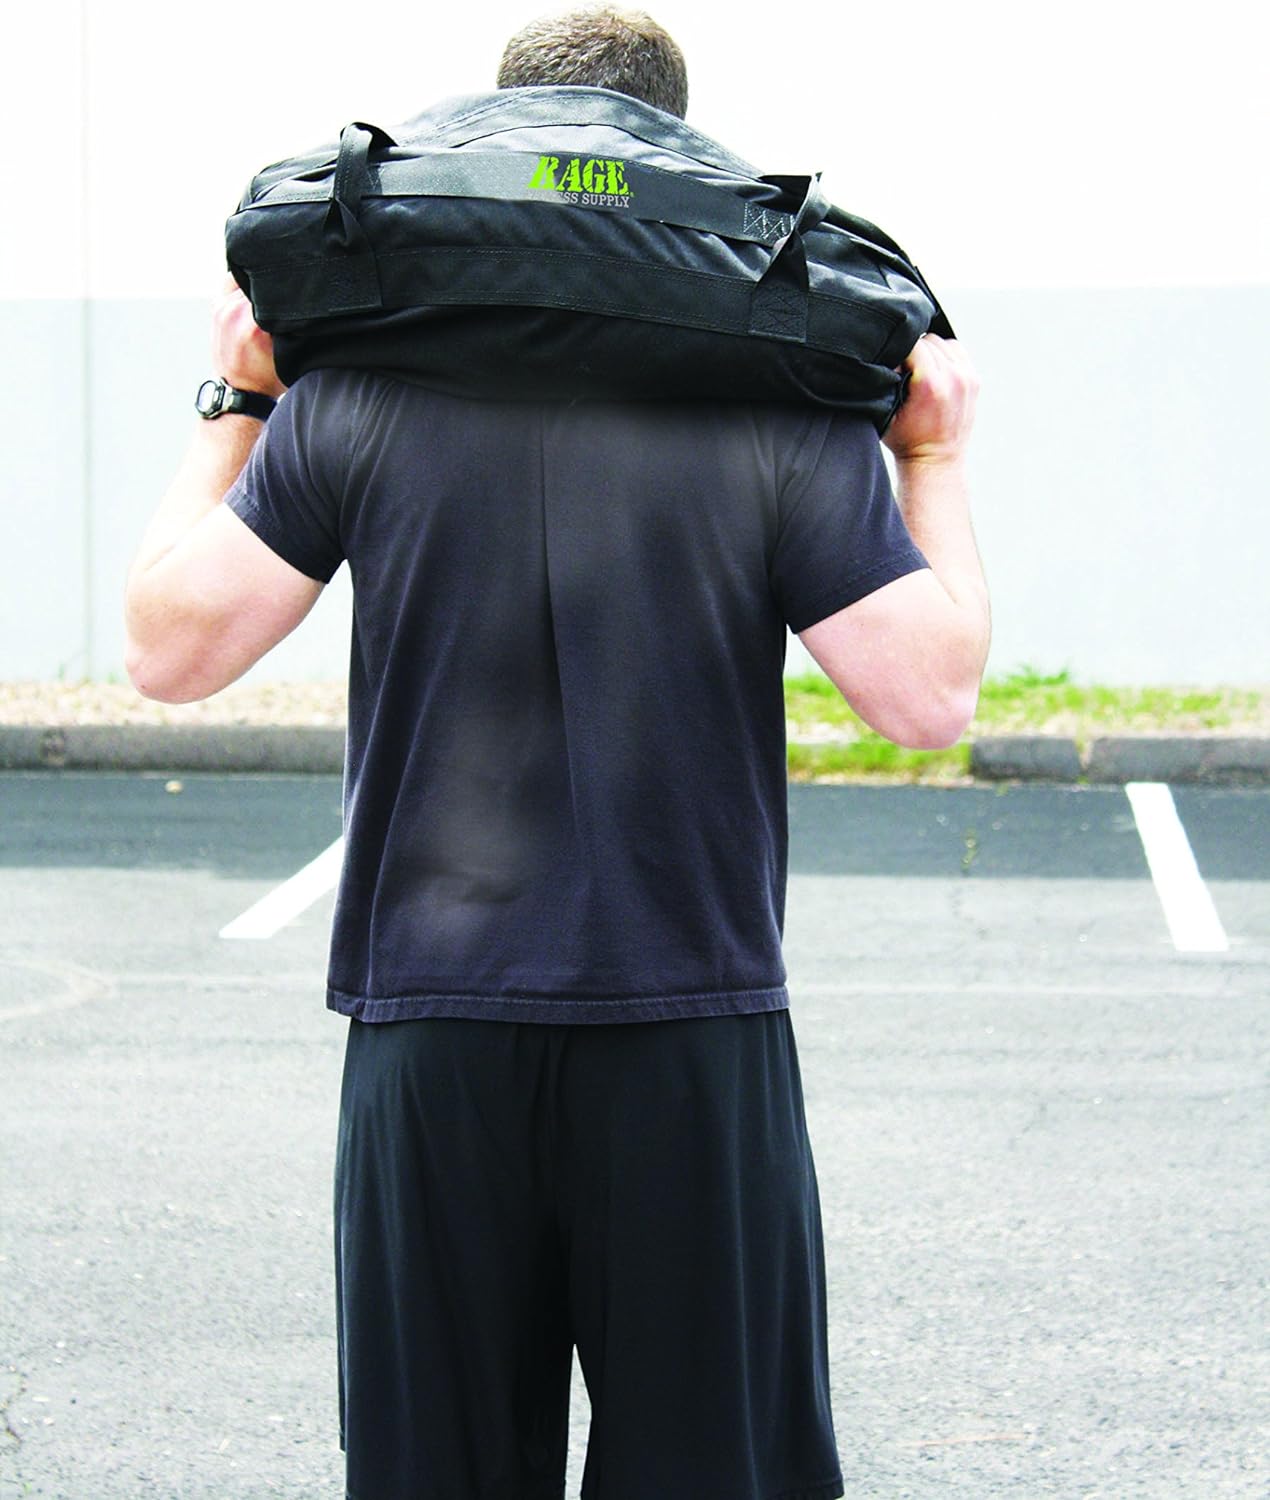 RAGE Fitness Sand Bag Kit